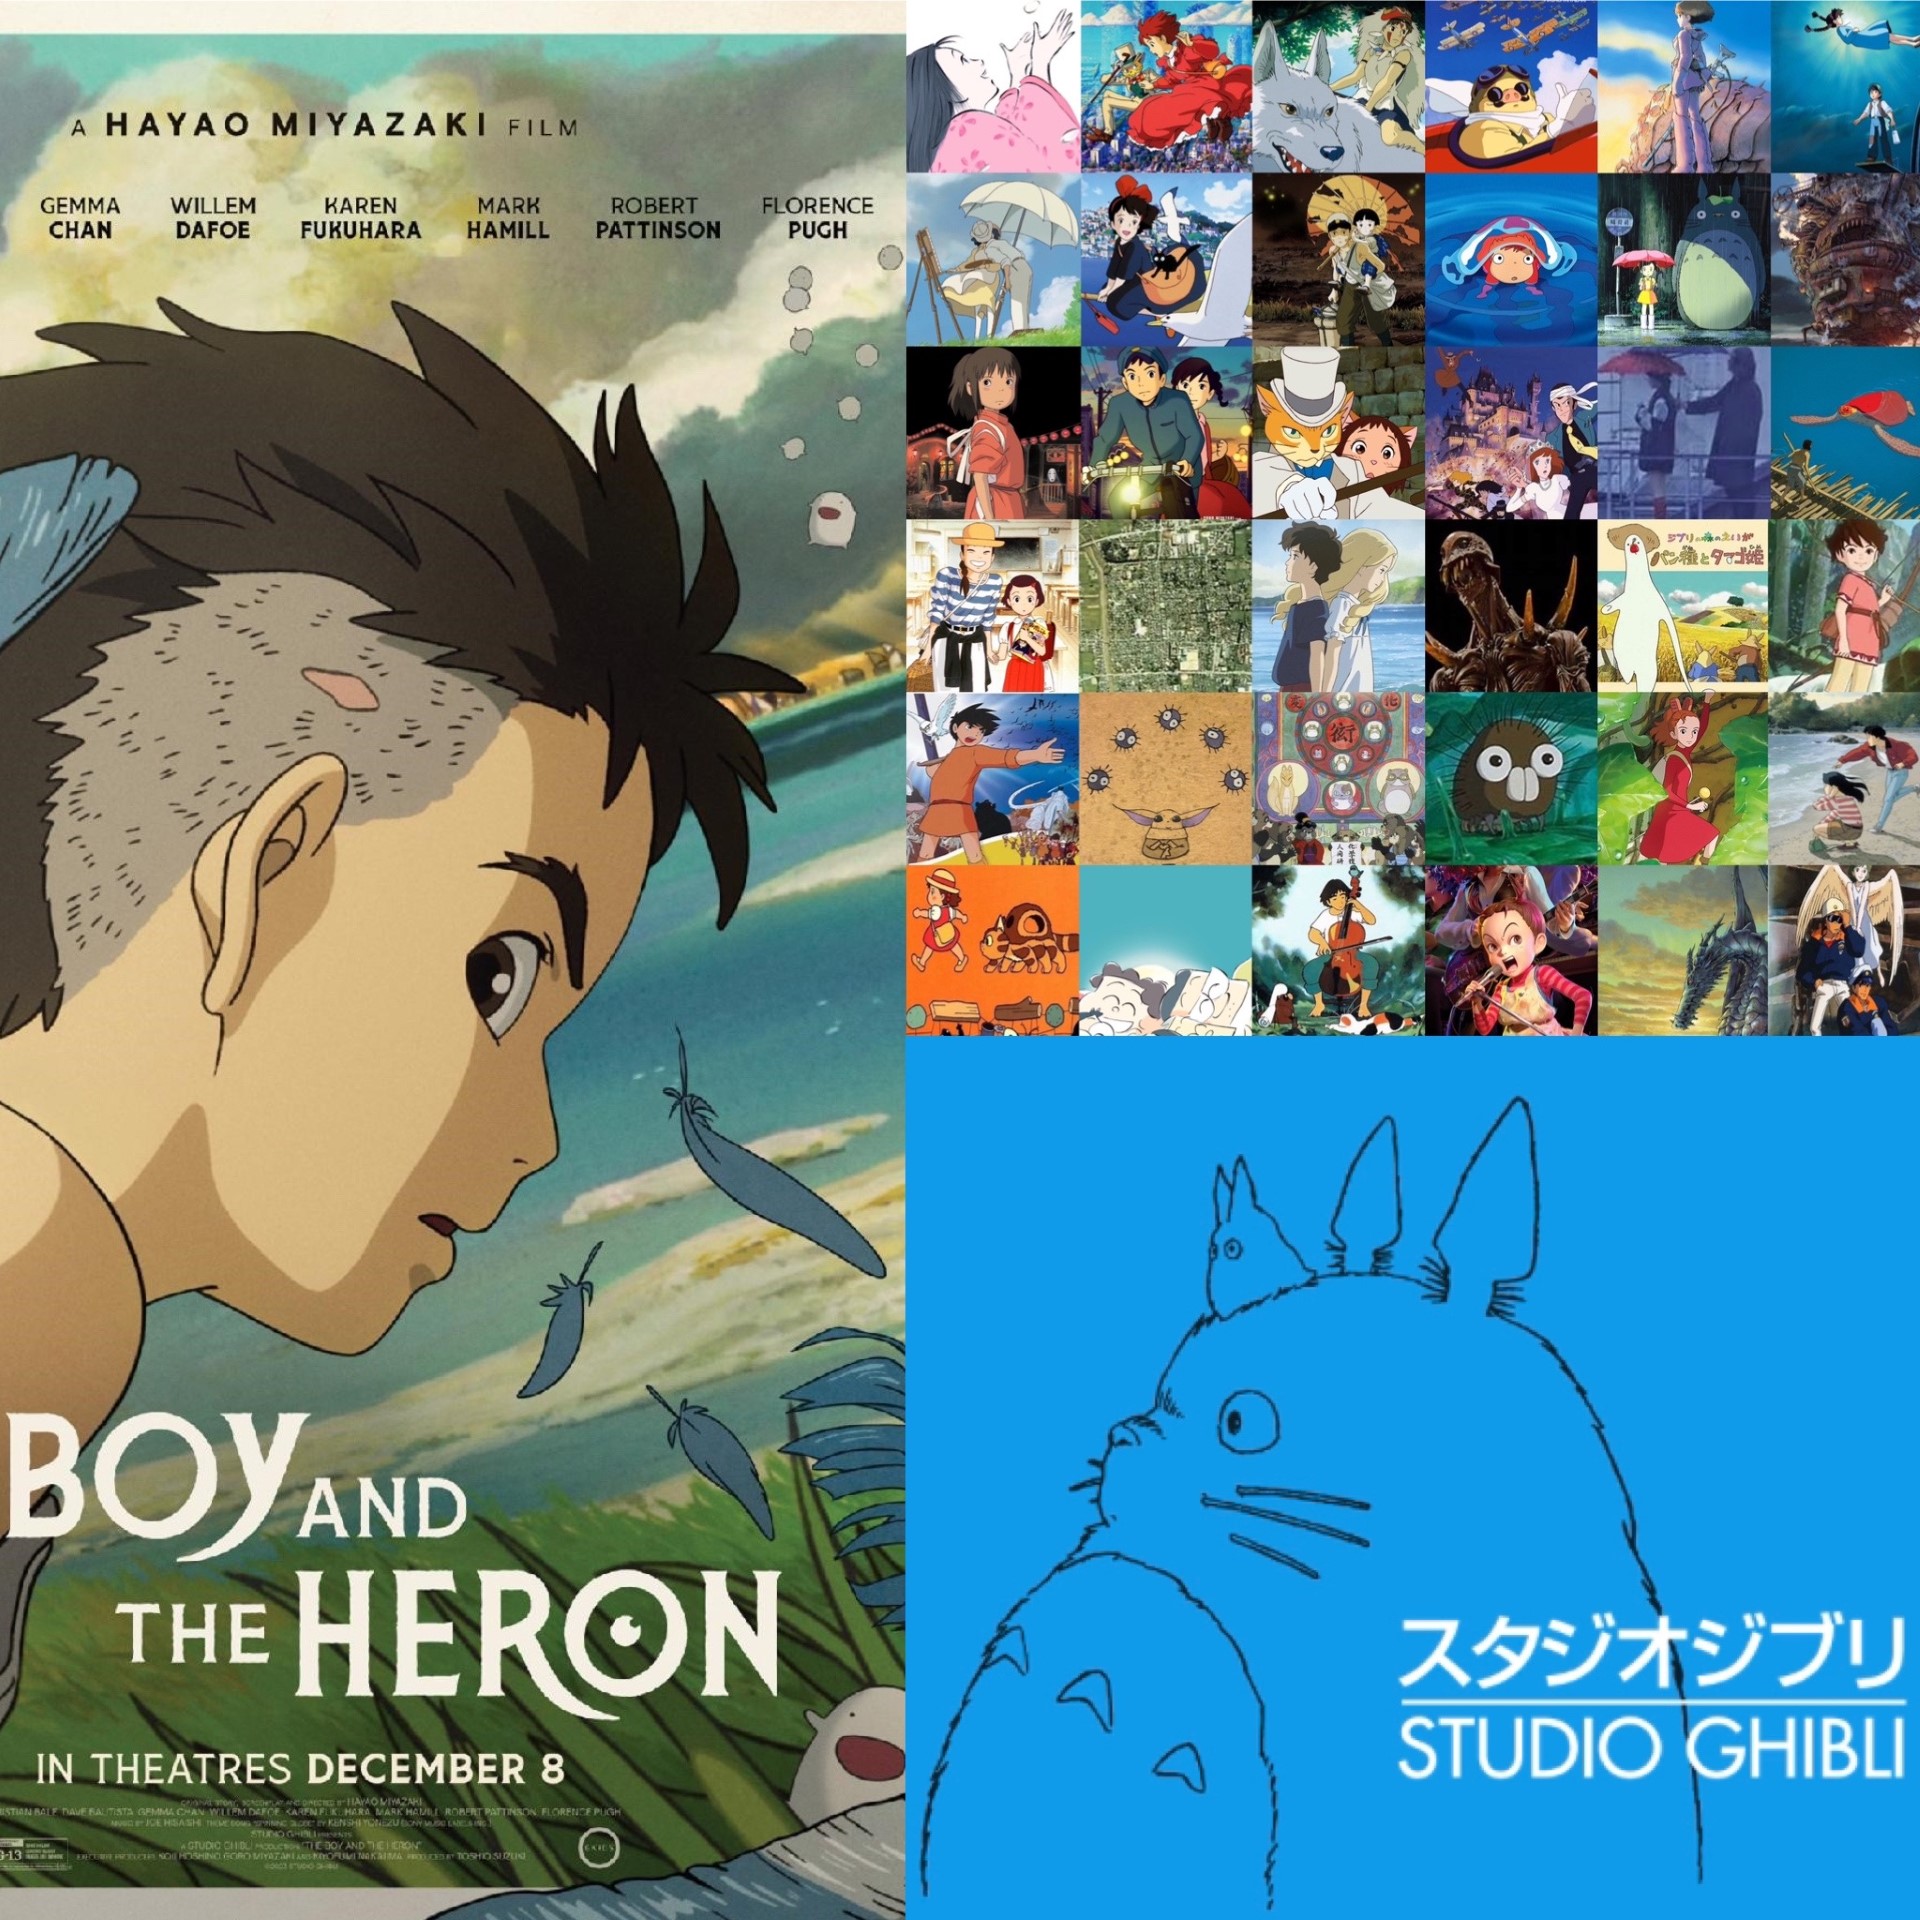 Justice for Ponyo, one of Miyazaki and Studio Ghibli's “bad” movies -  Polygon